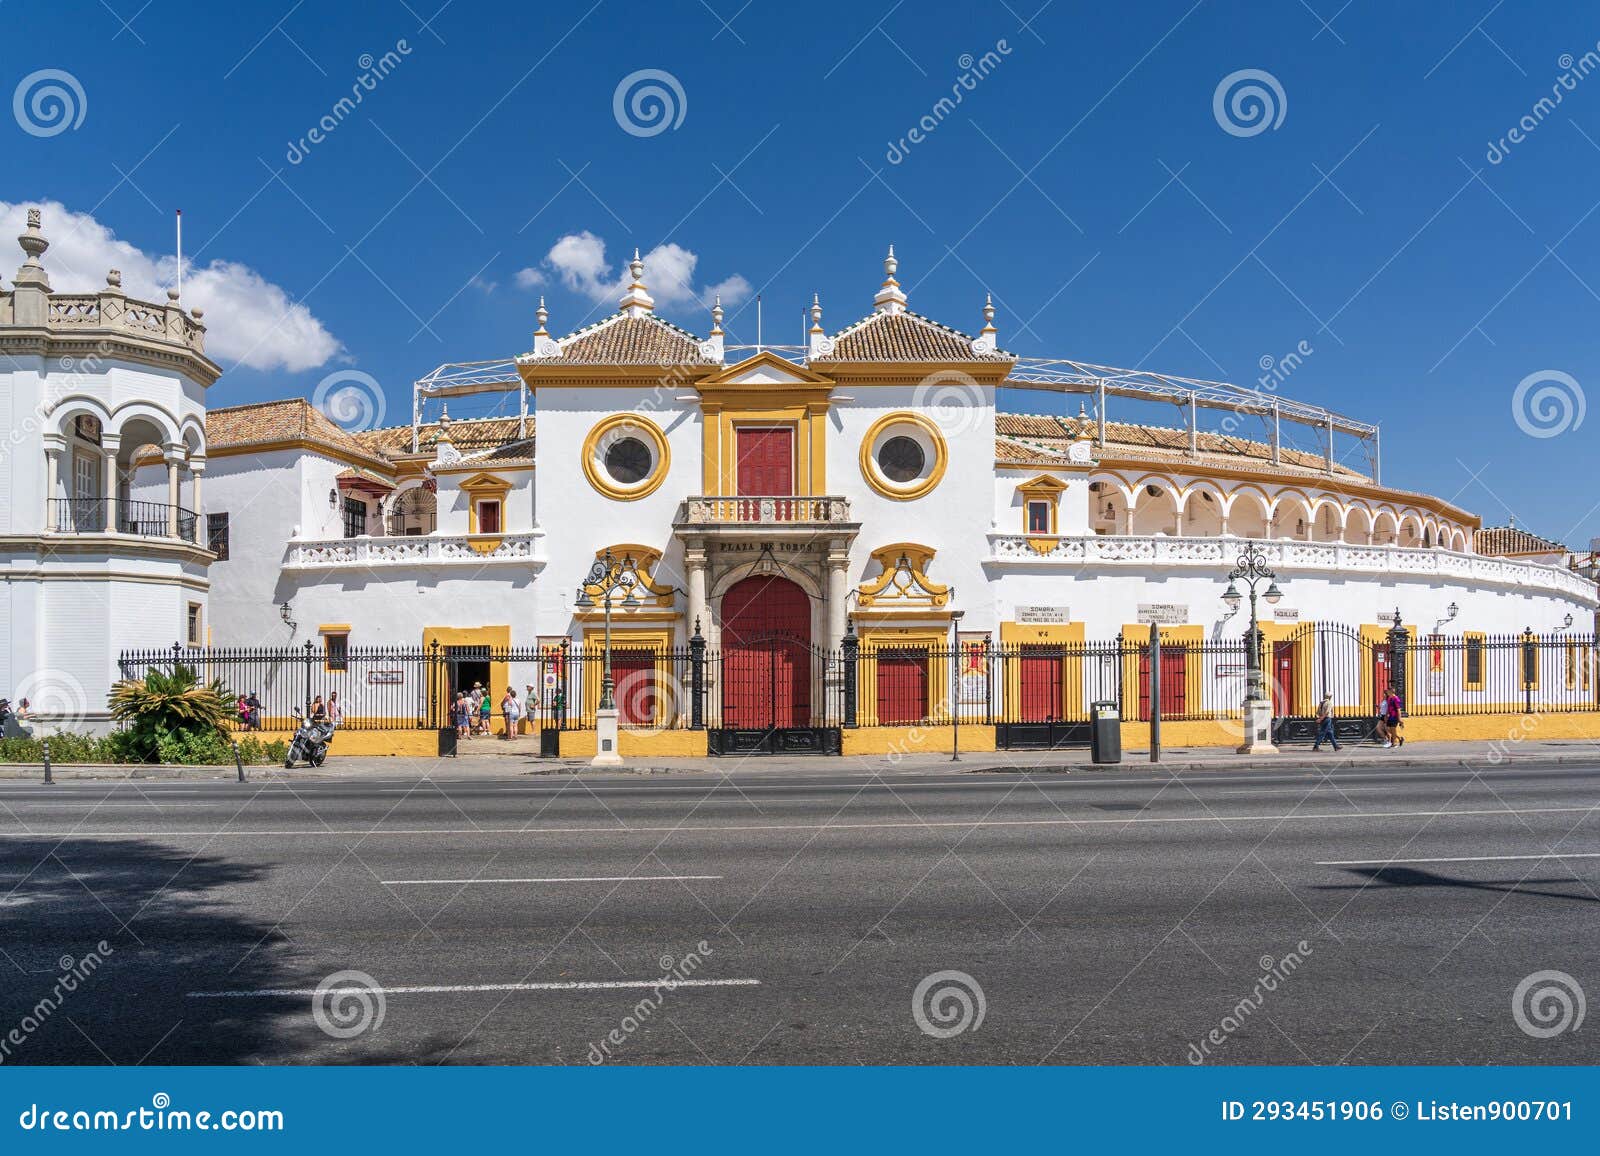 front view of the entrance of maestranza, the plaza de toros de la real maestranza de caballeria de sevilla, seville, spain